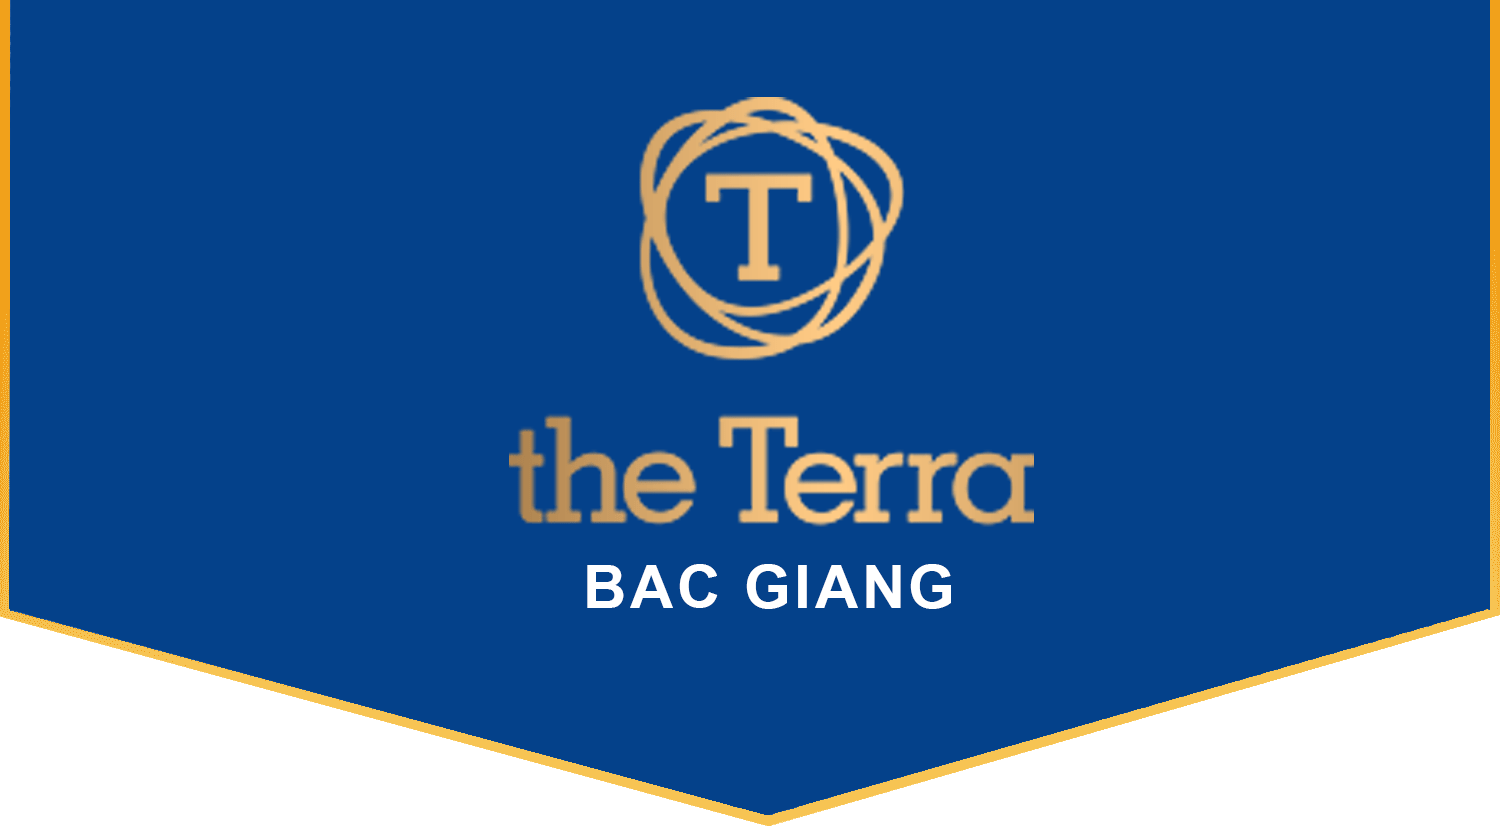 The Terra